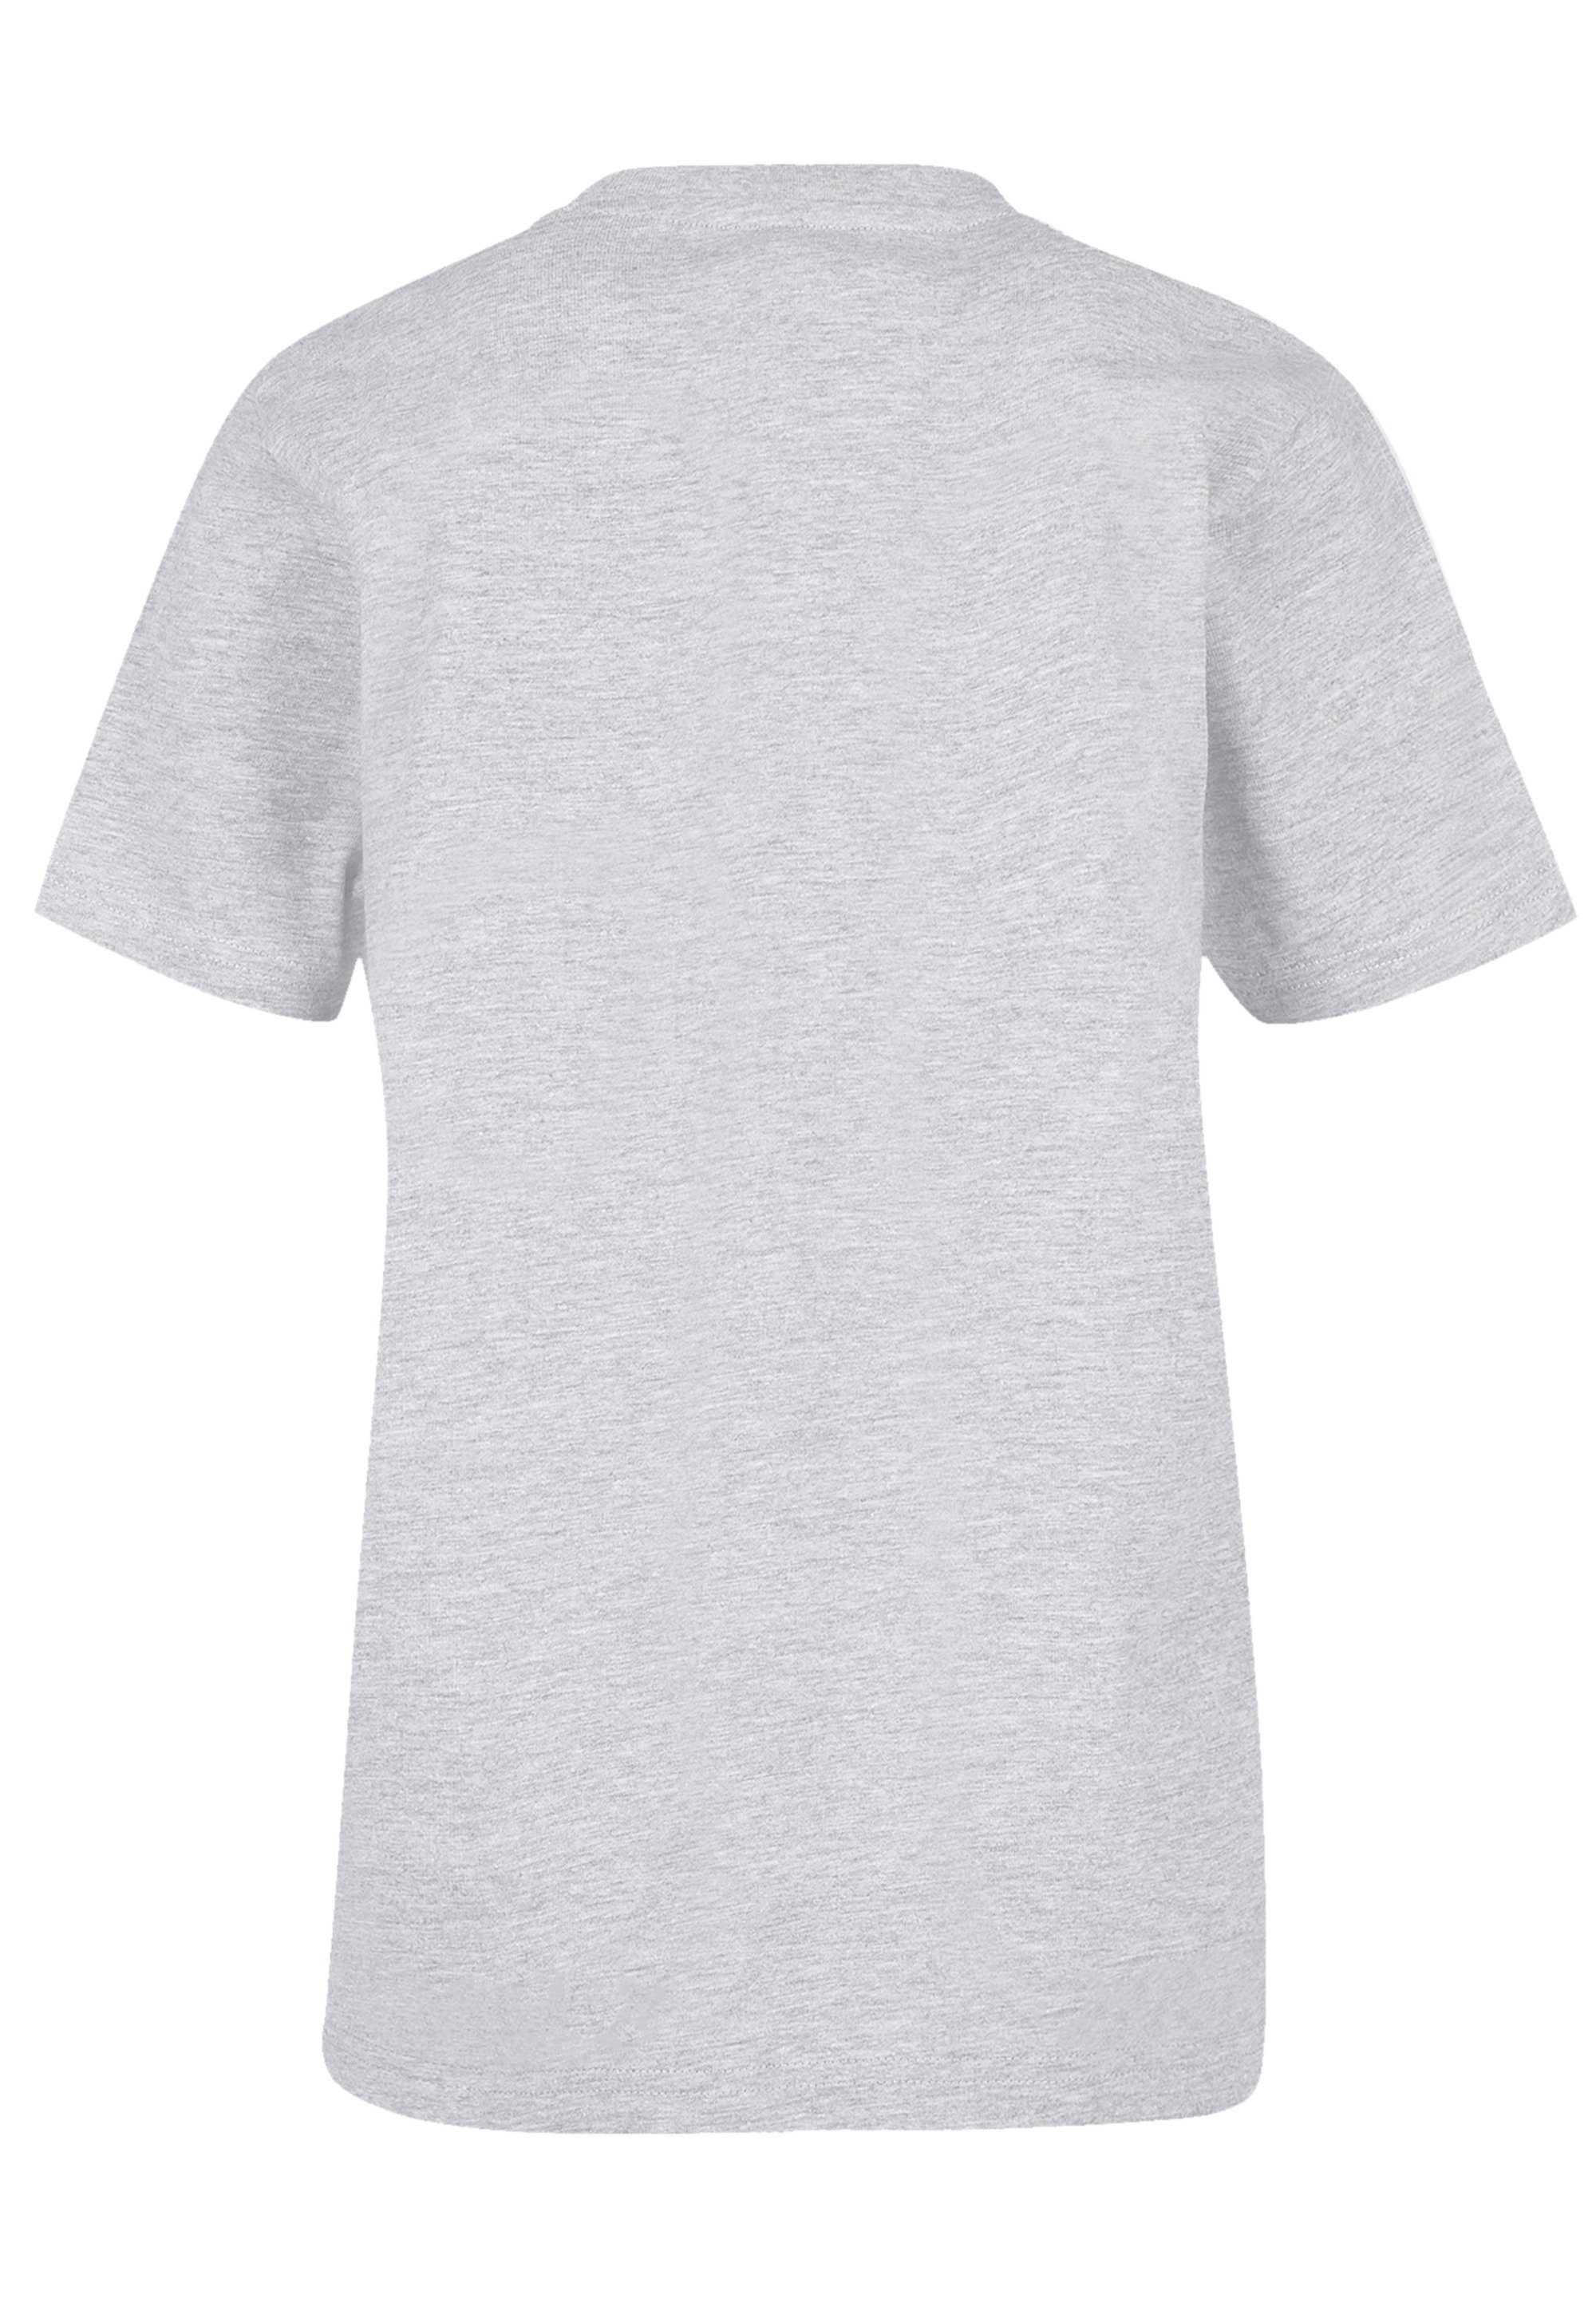 Crew grey Halloween Boo Print T-Shirt F4NT4STIC heather